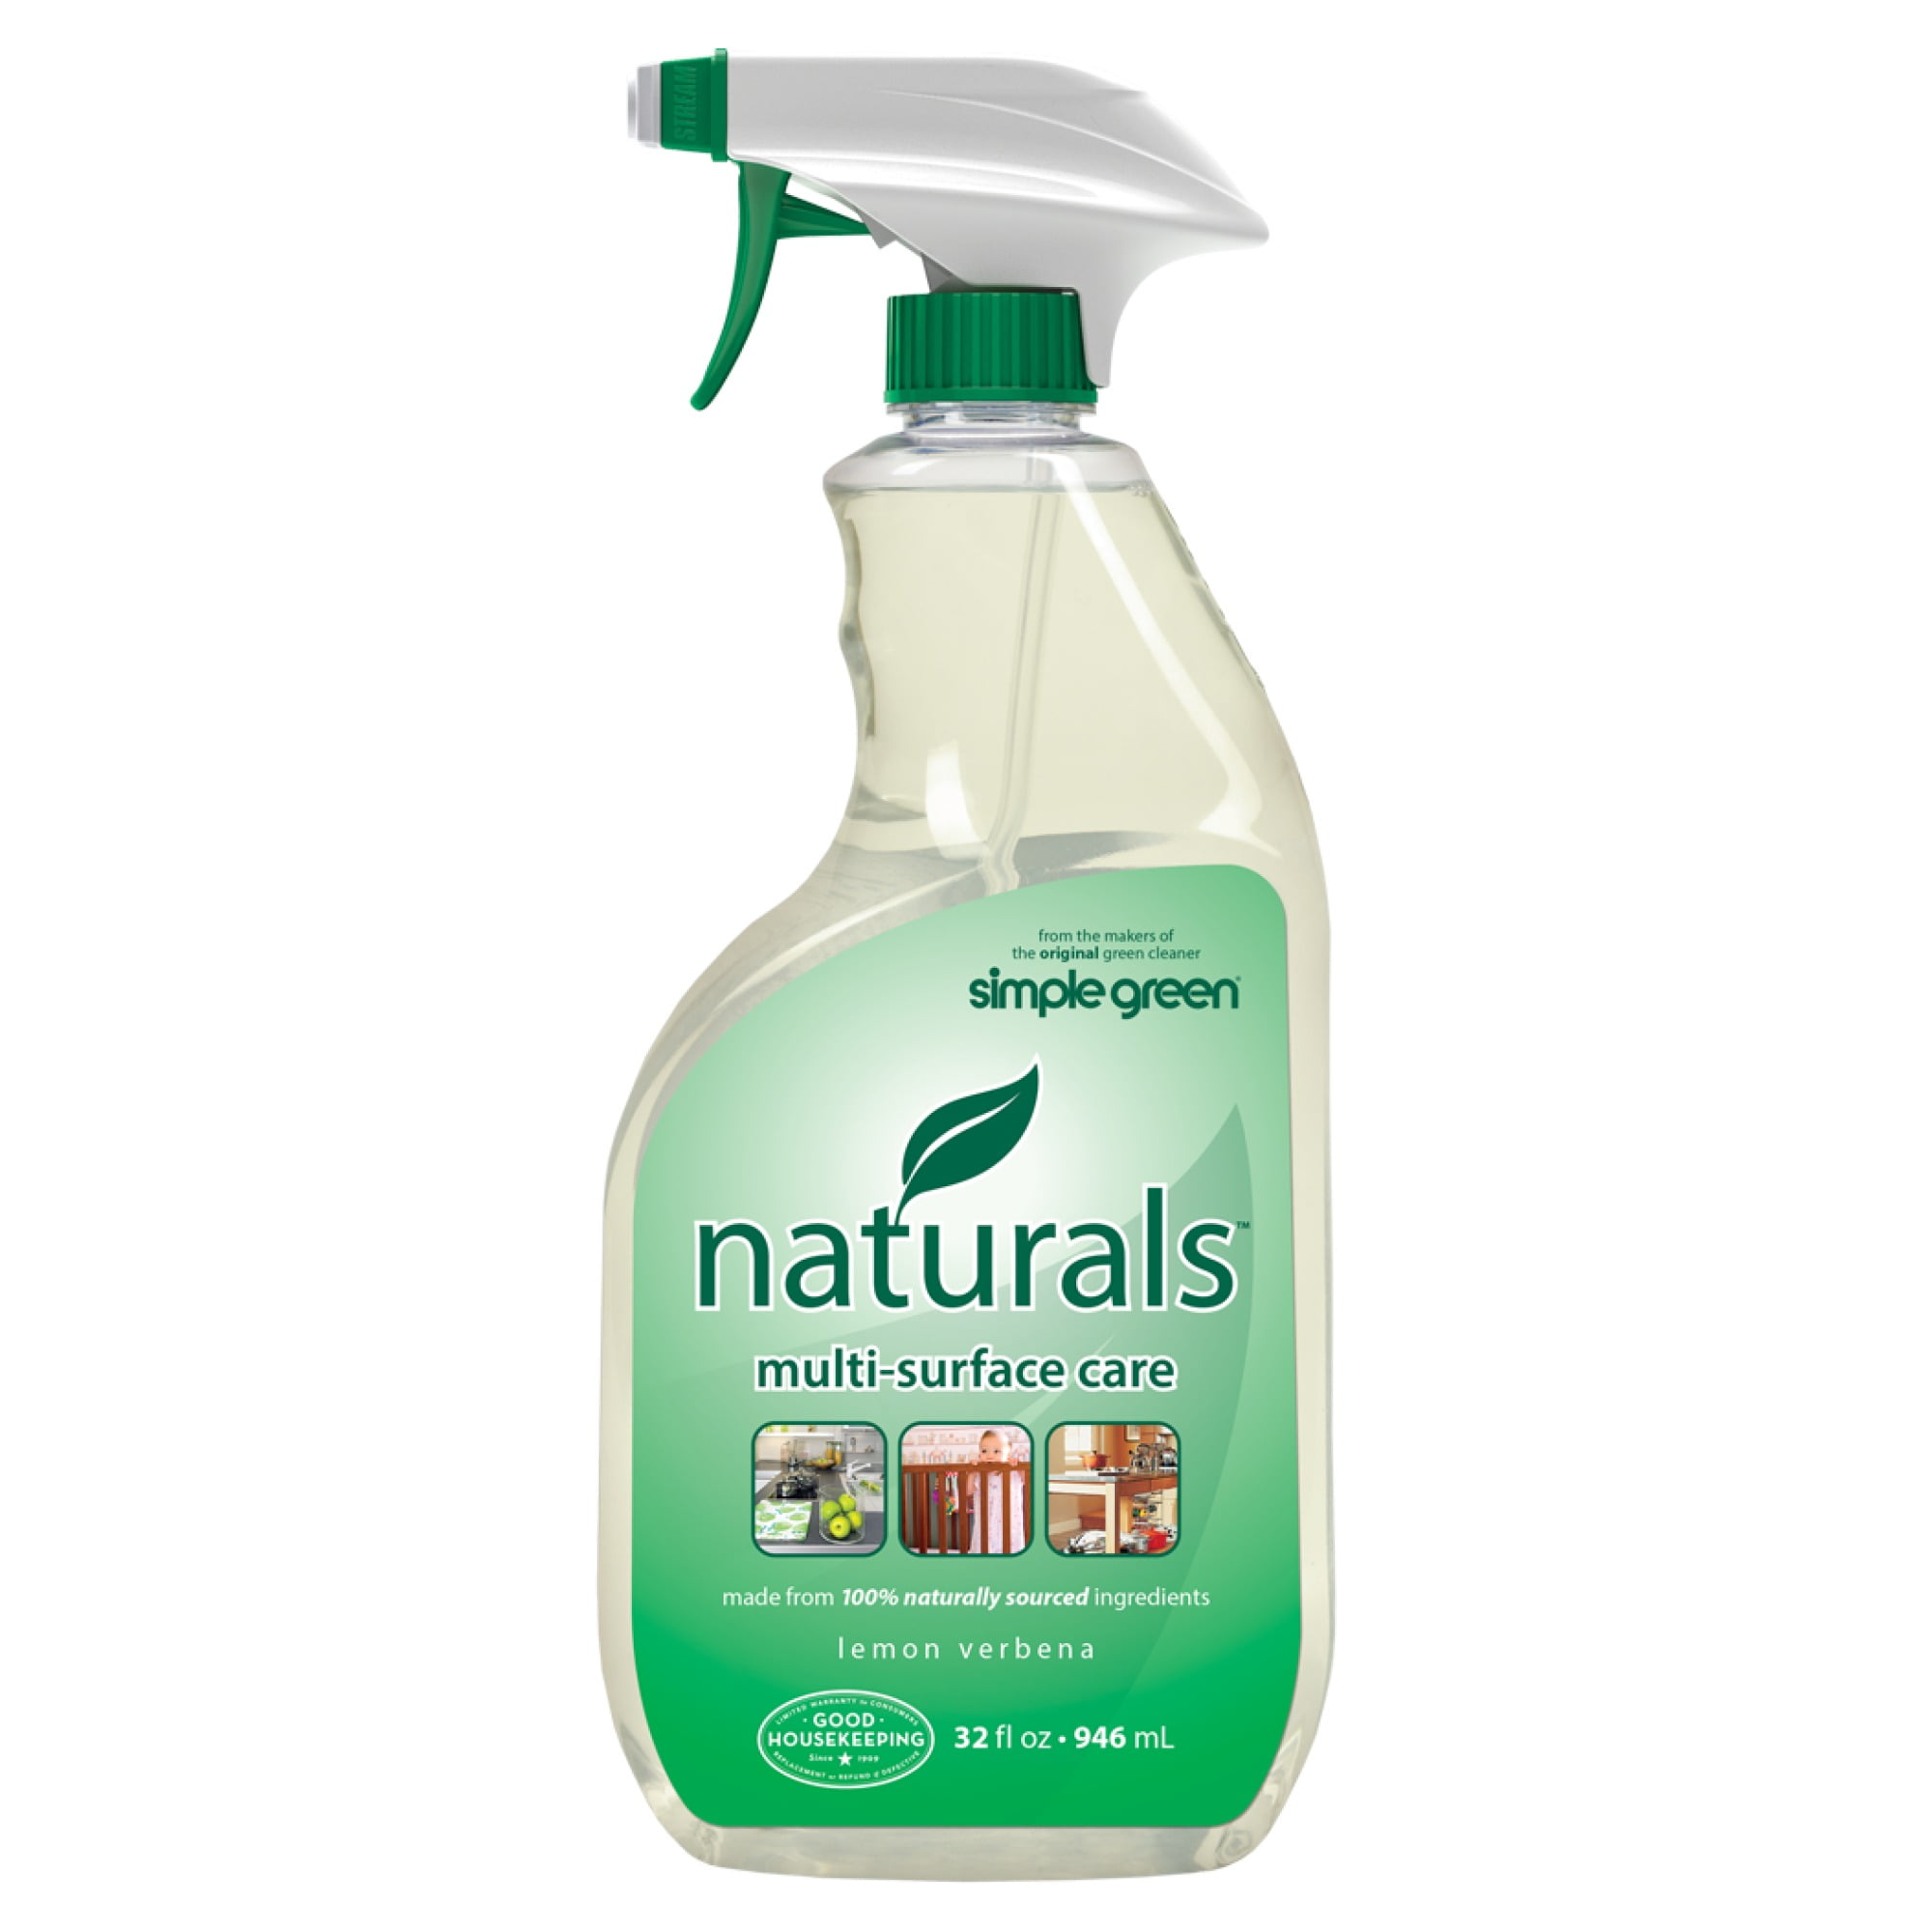 Natural Green Cleaner Disinfectant Spray - Floris Naturals